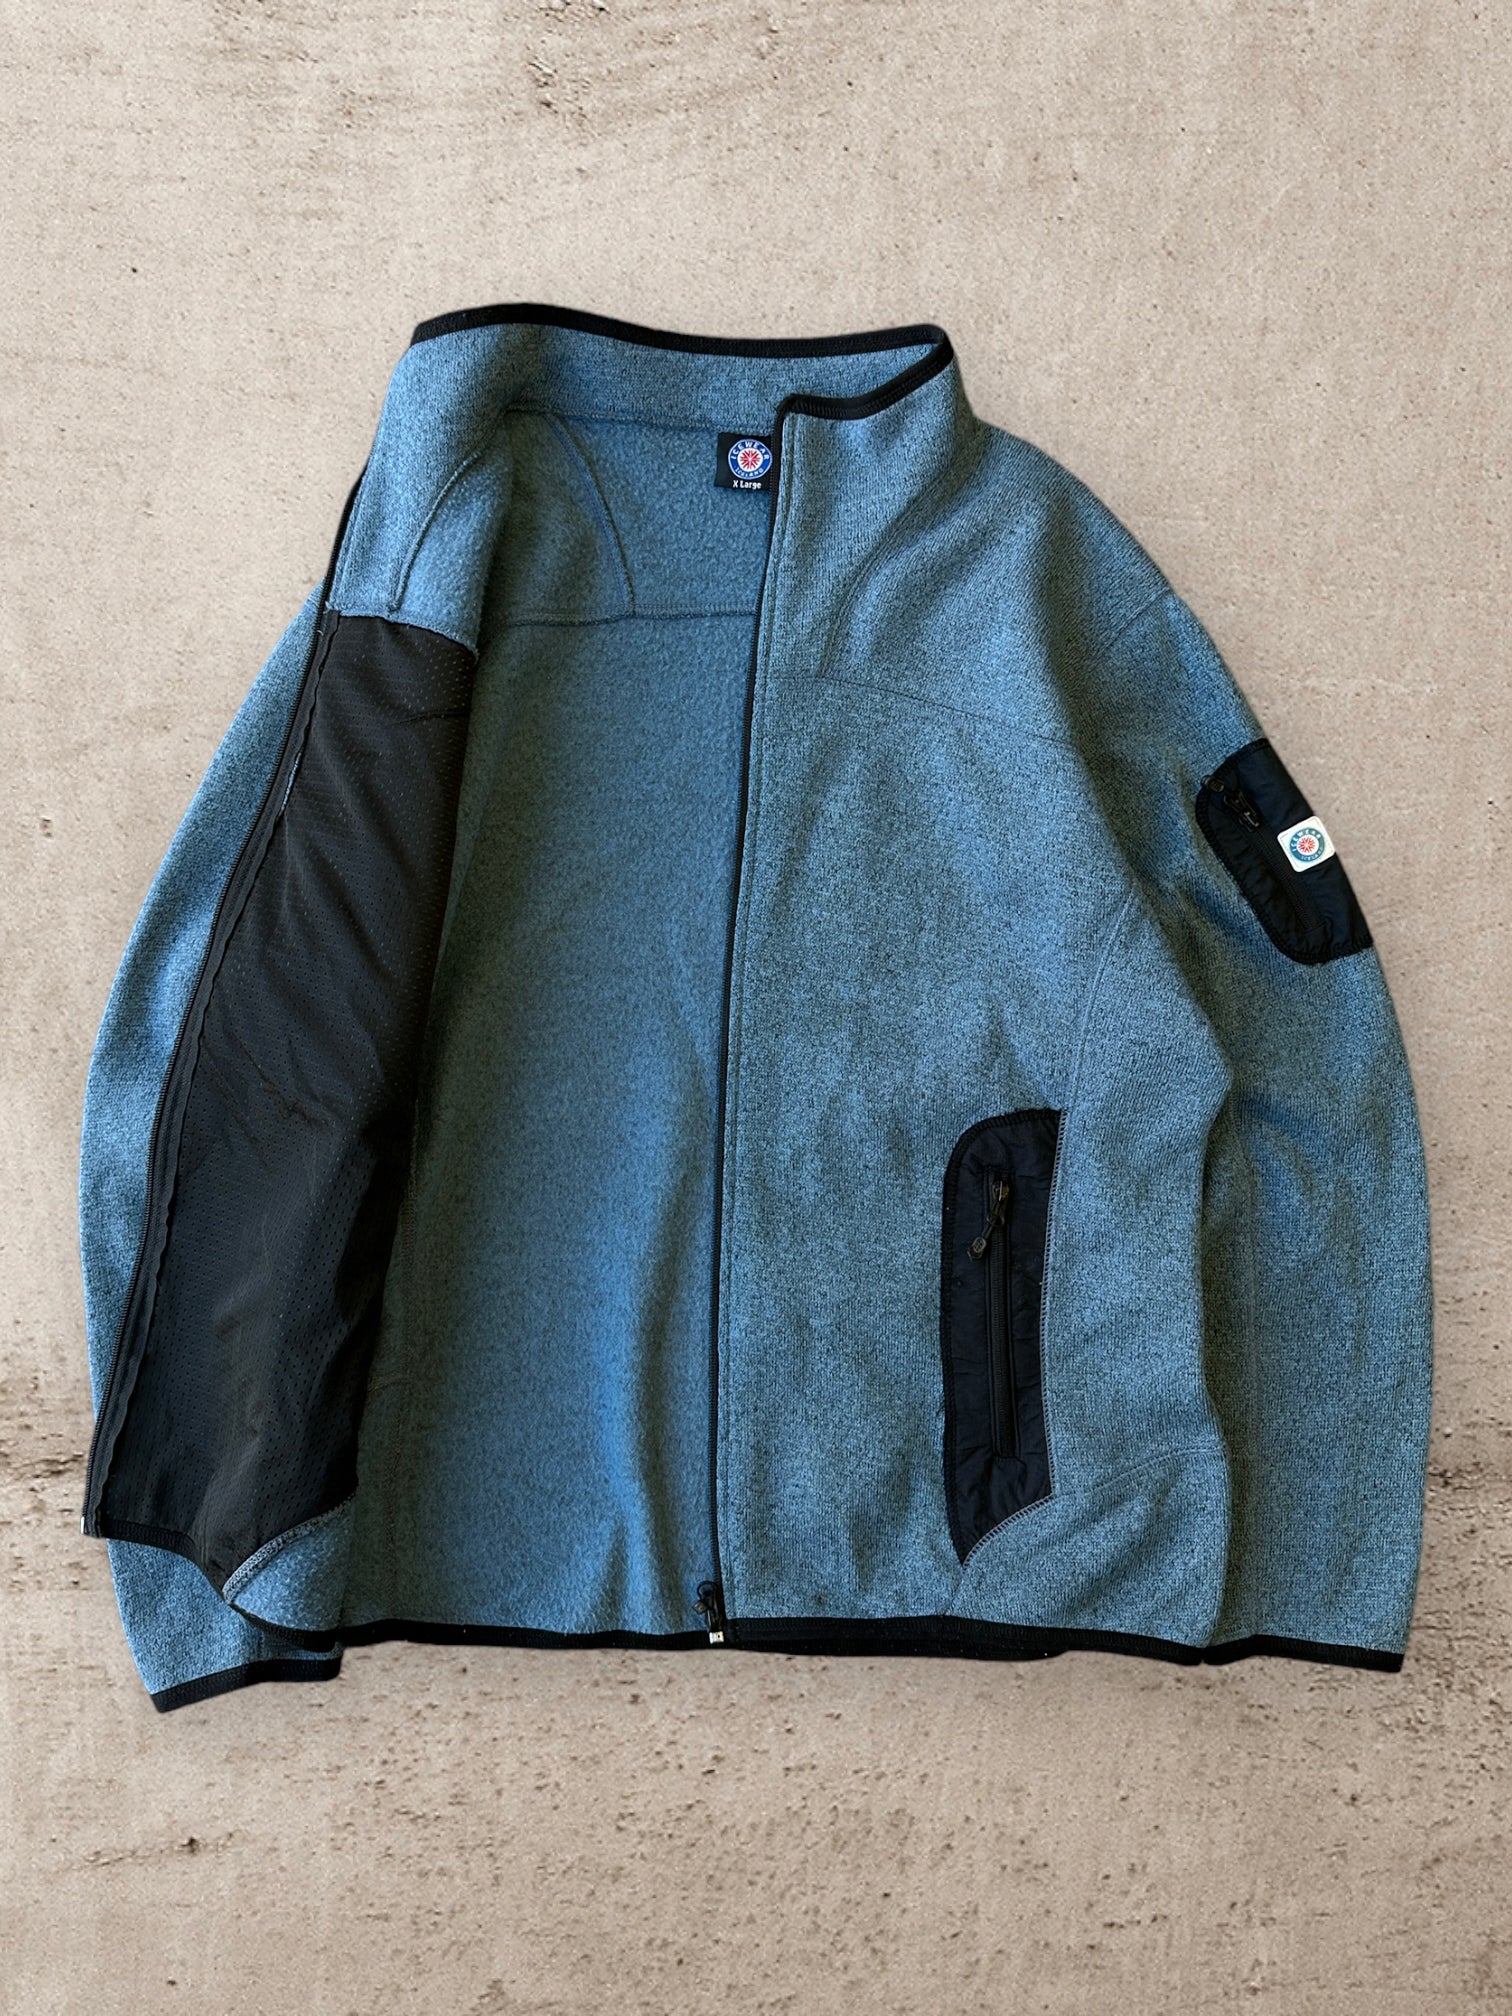 Vintage Ice Wear Fleece Jacket - XL